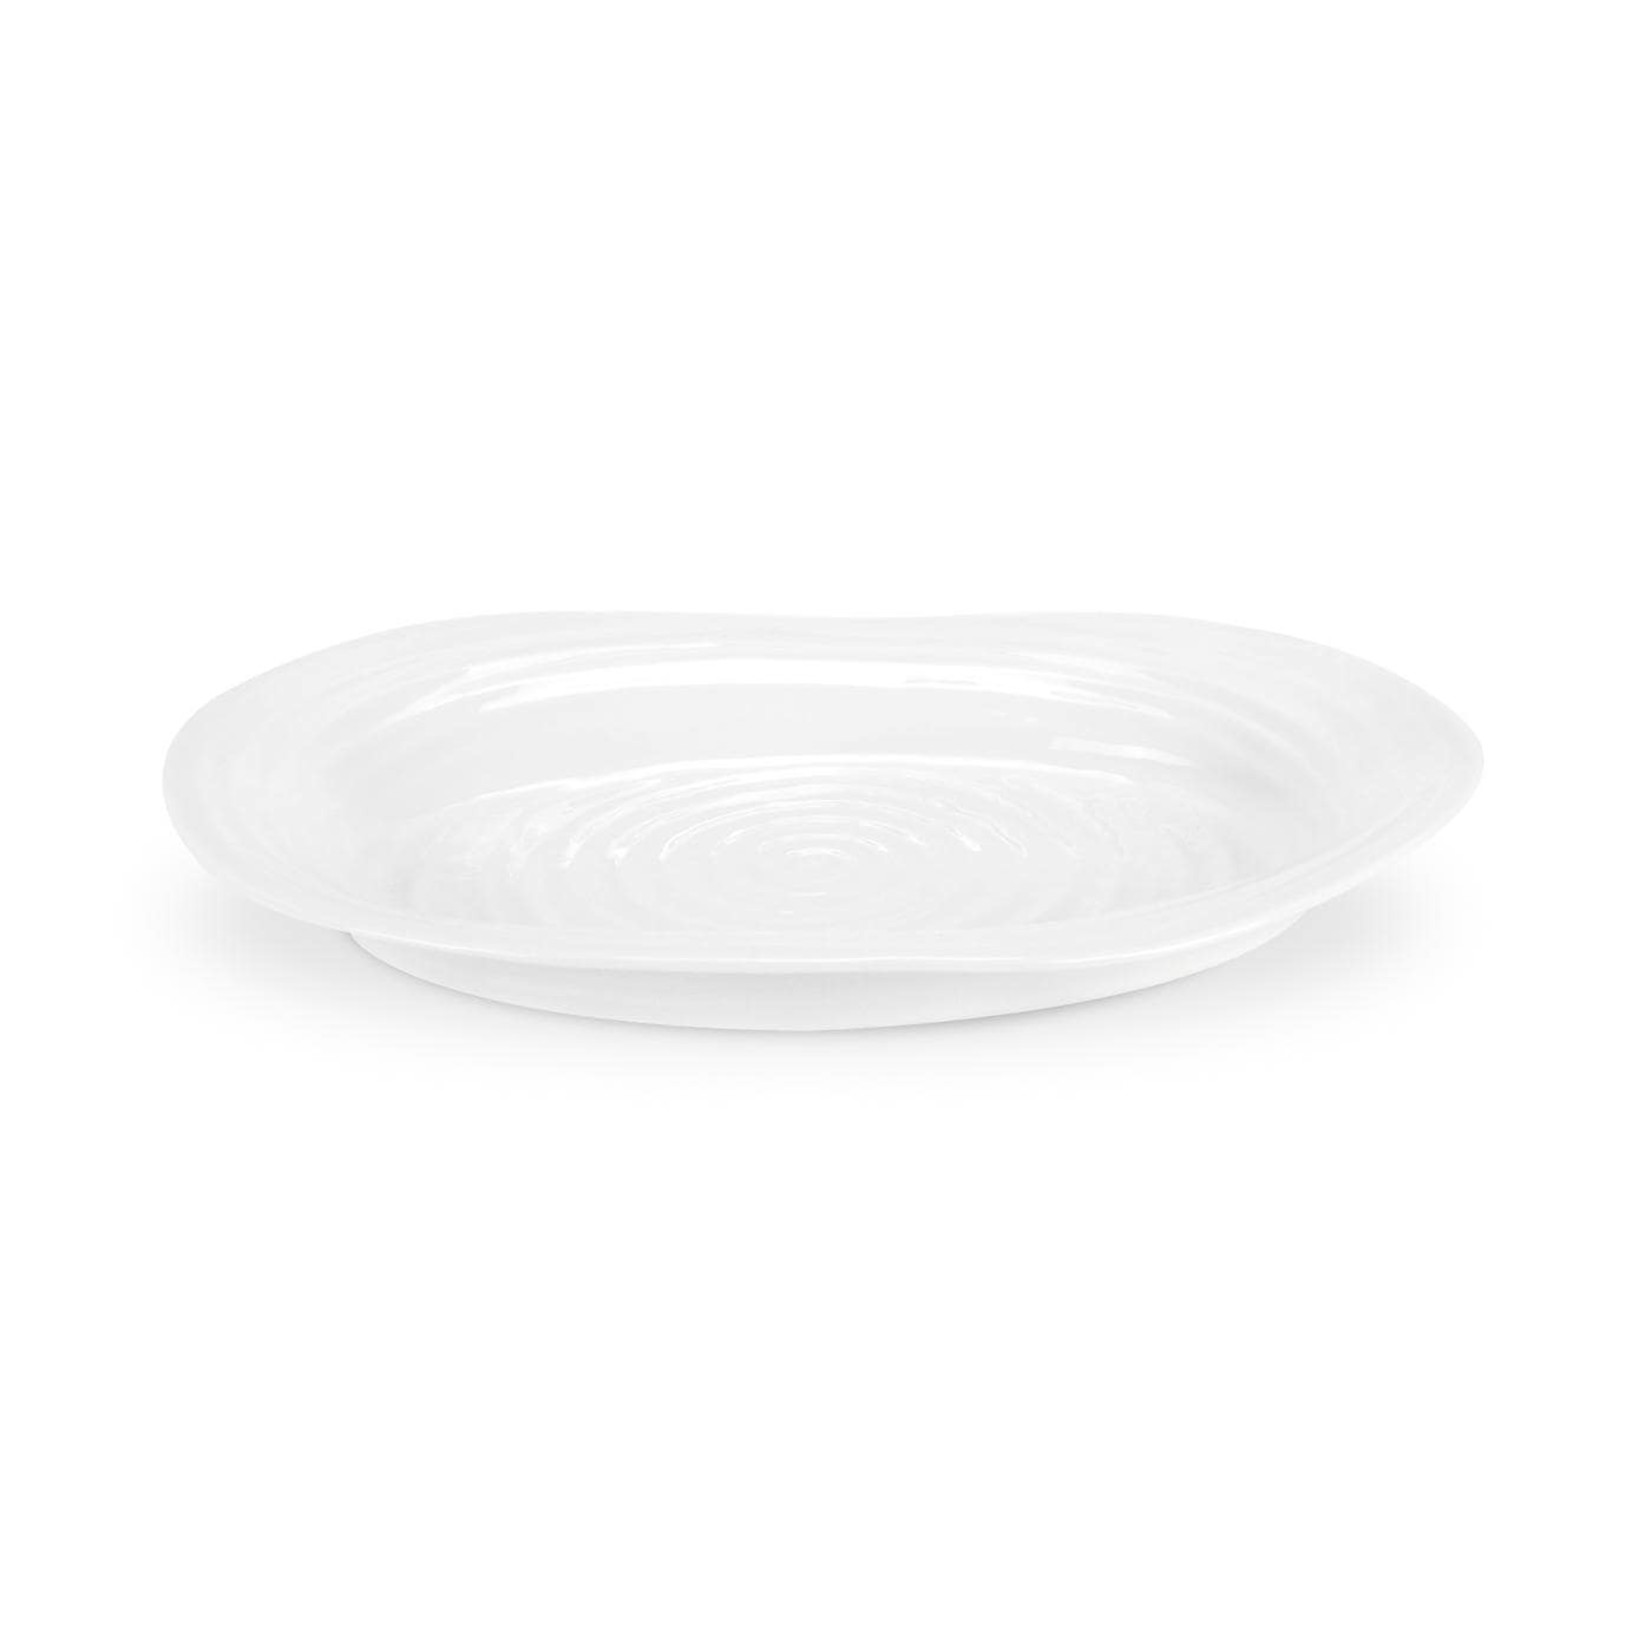 SOPHIE CONRAN SOPHIE CONRAN Oval Platter Medium 14.5" - White